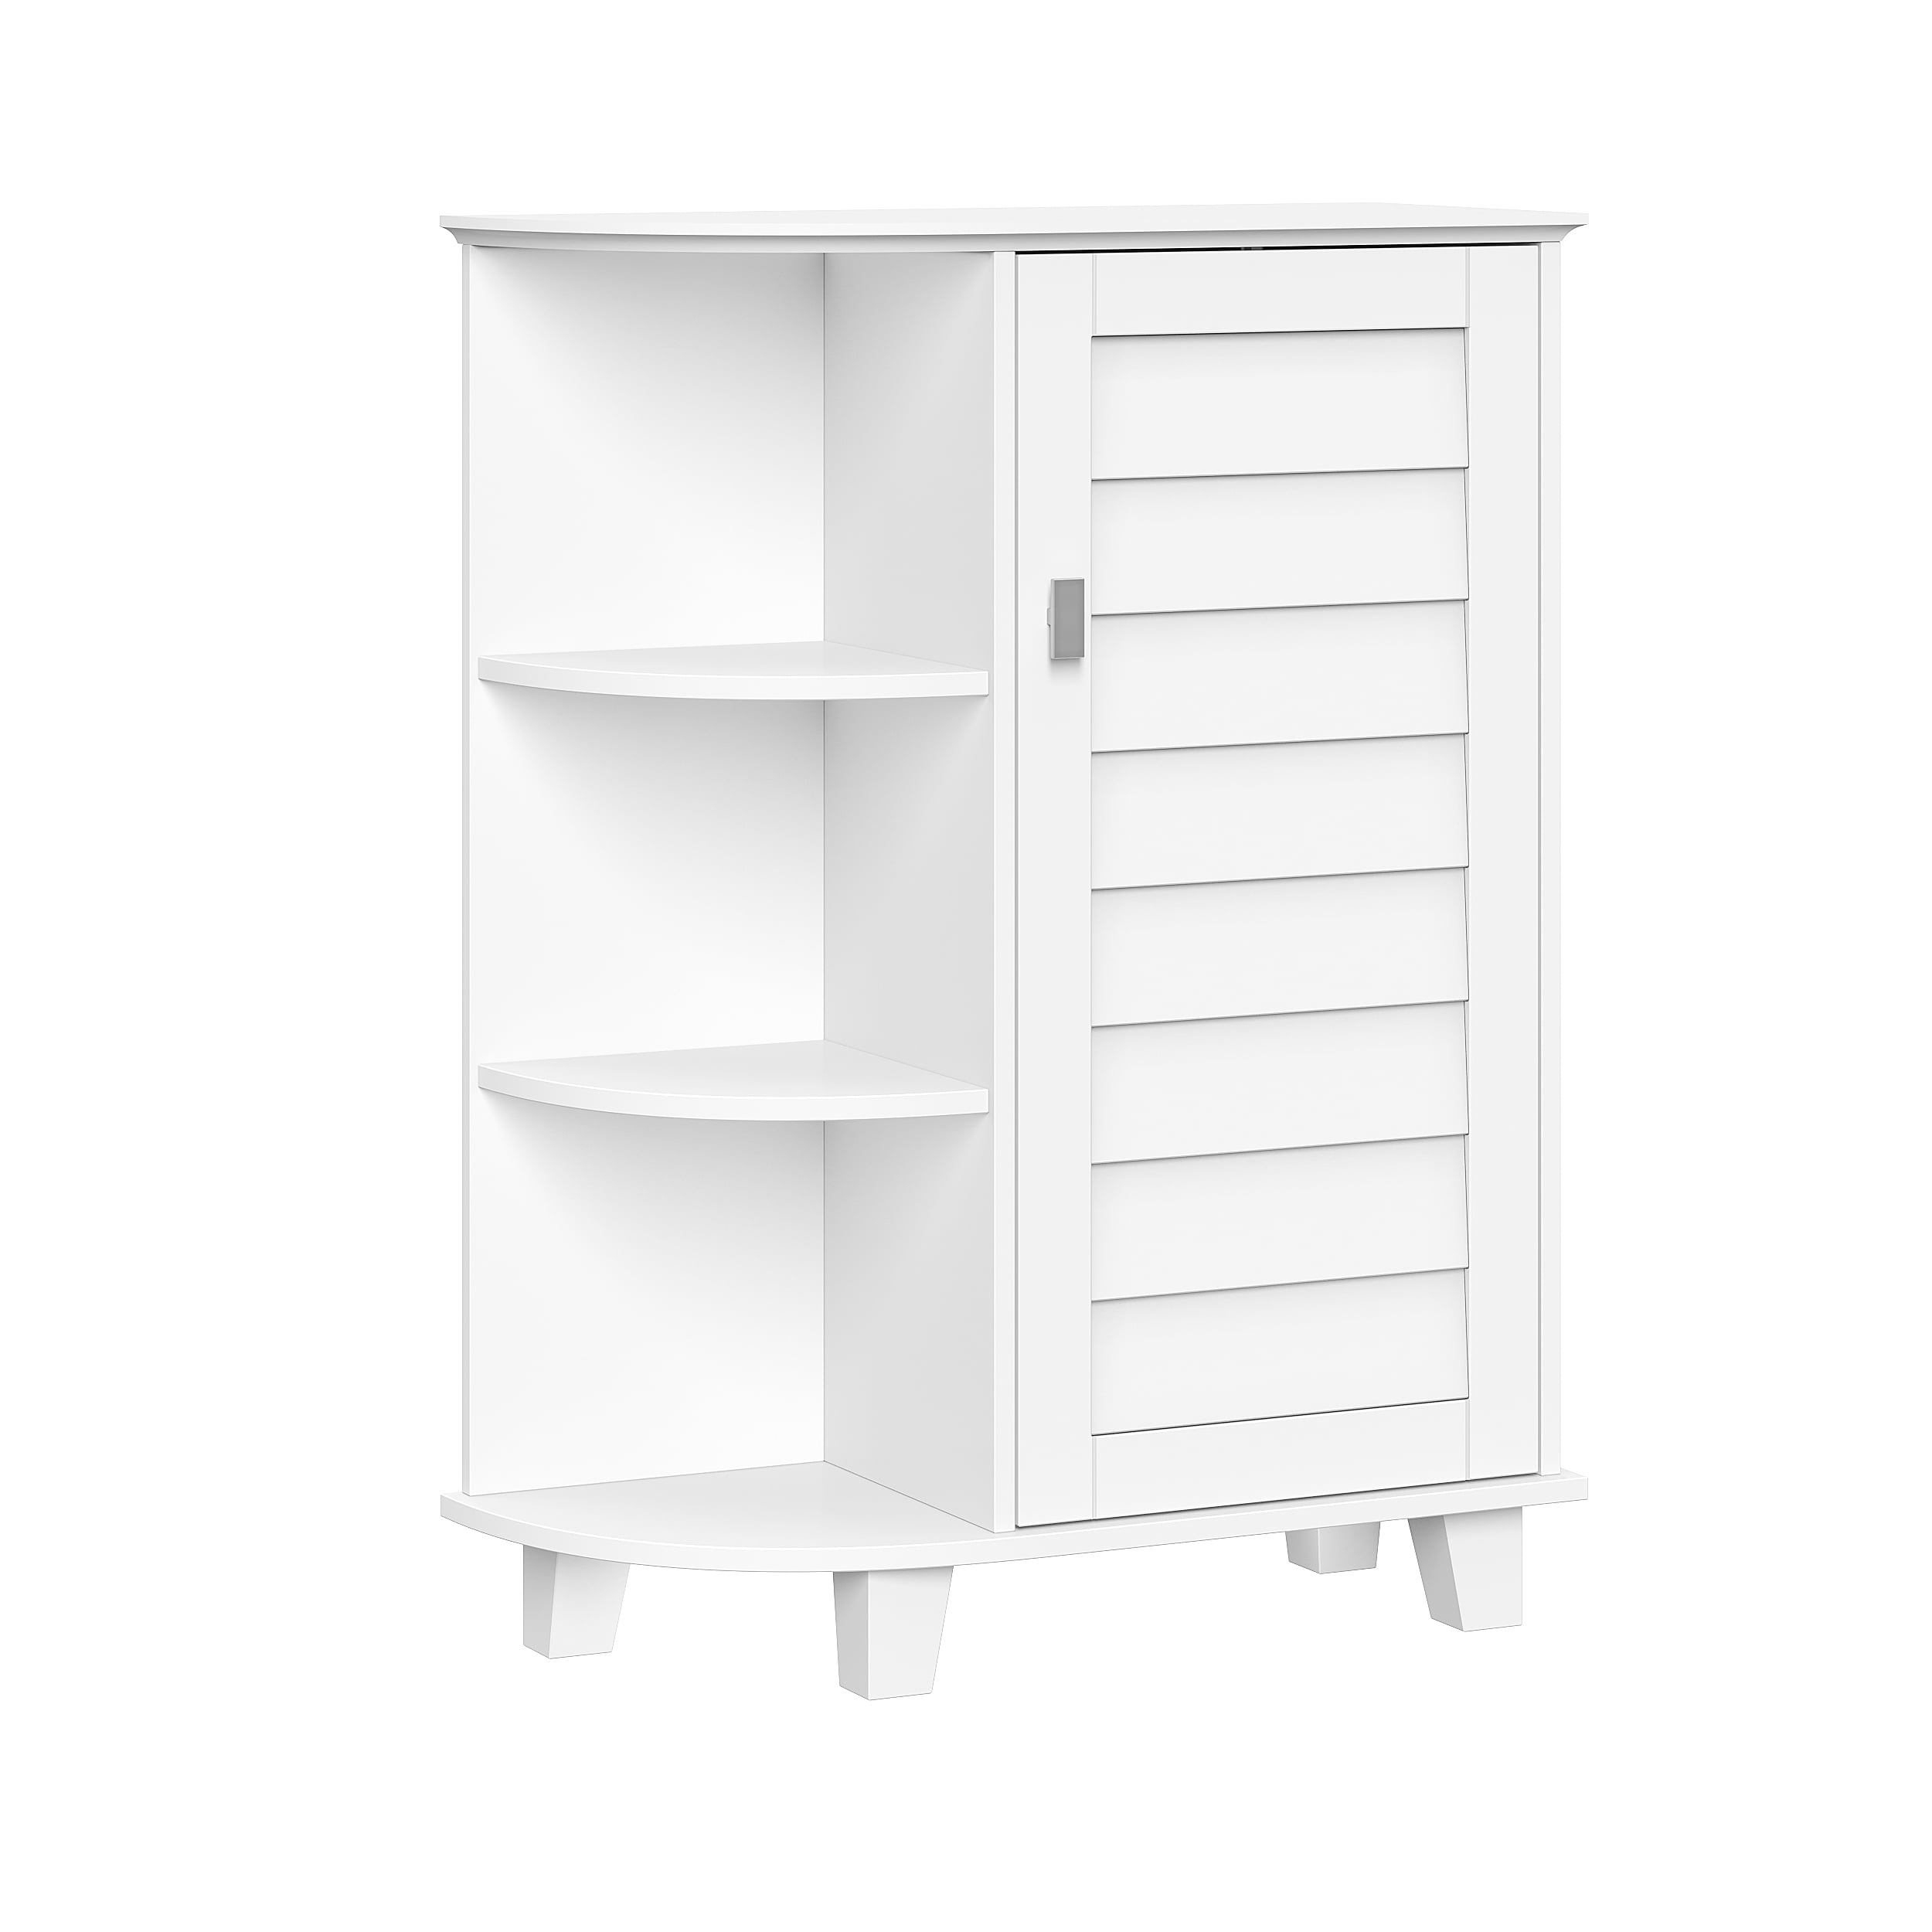 Ameriwood Home Youngstin Mini Refrigerator Storage Cabinet, White -  Walmart.com